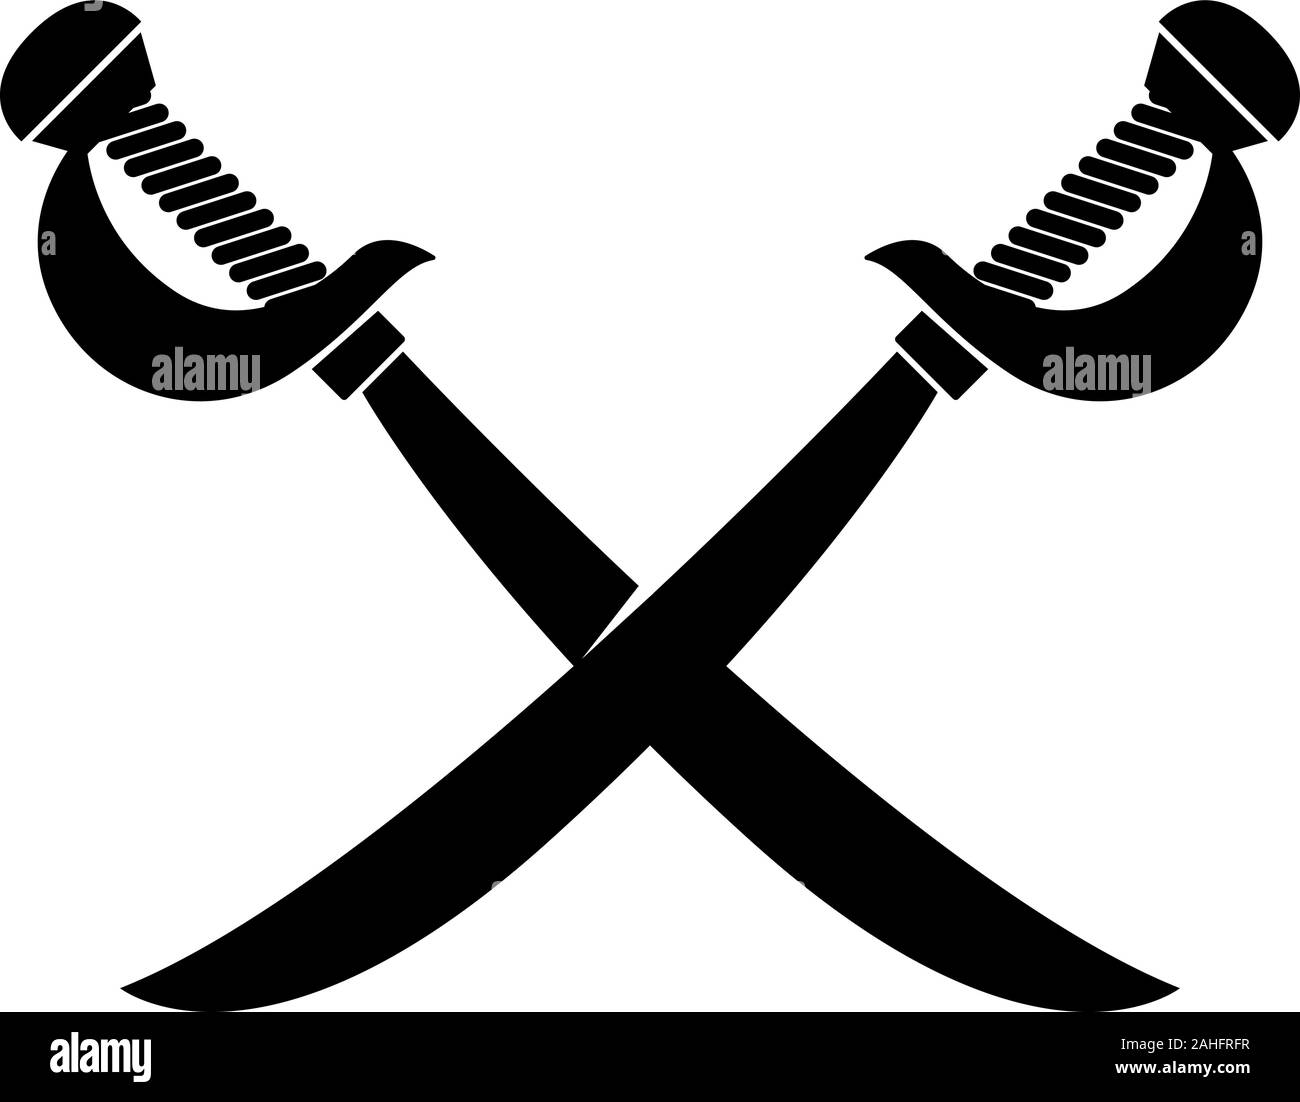 Crossed swords isolated on white background. Design element for logo ...